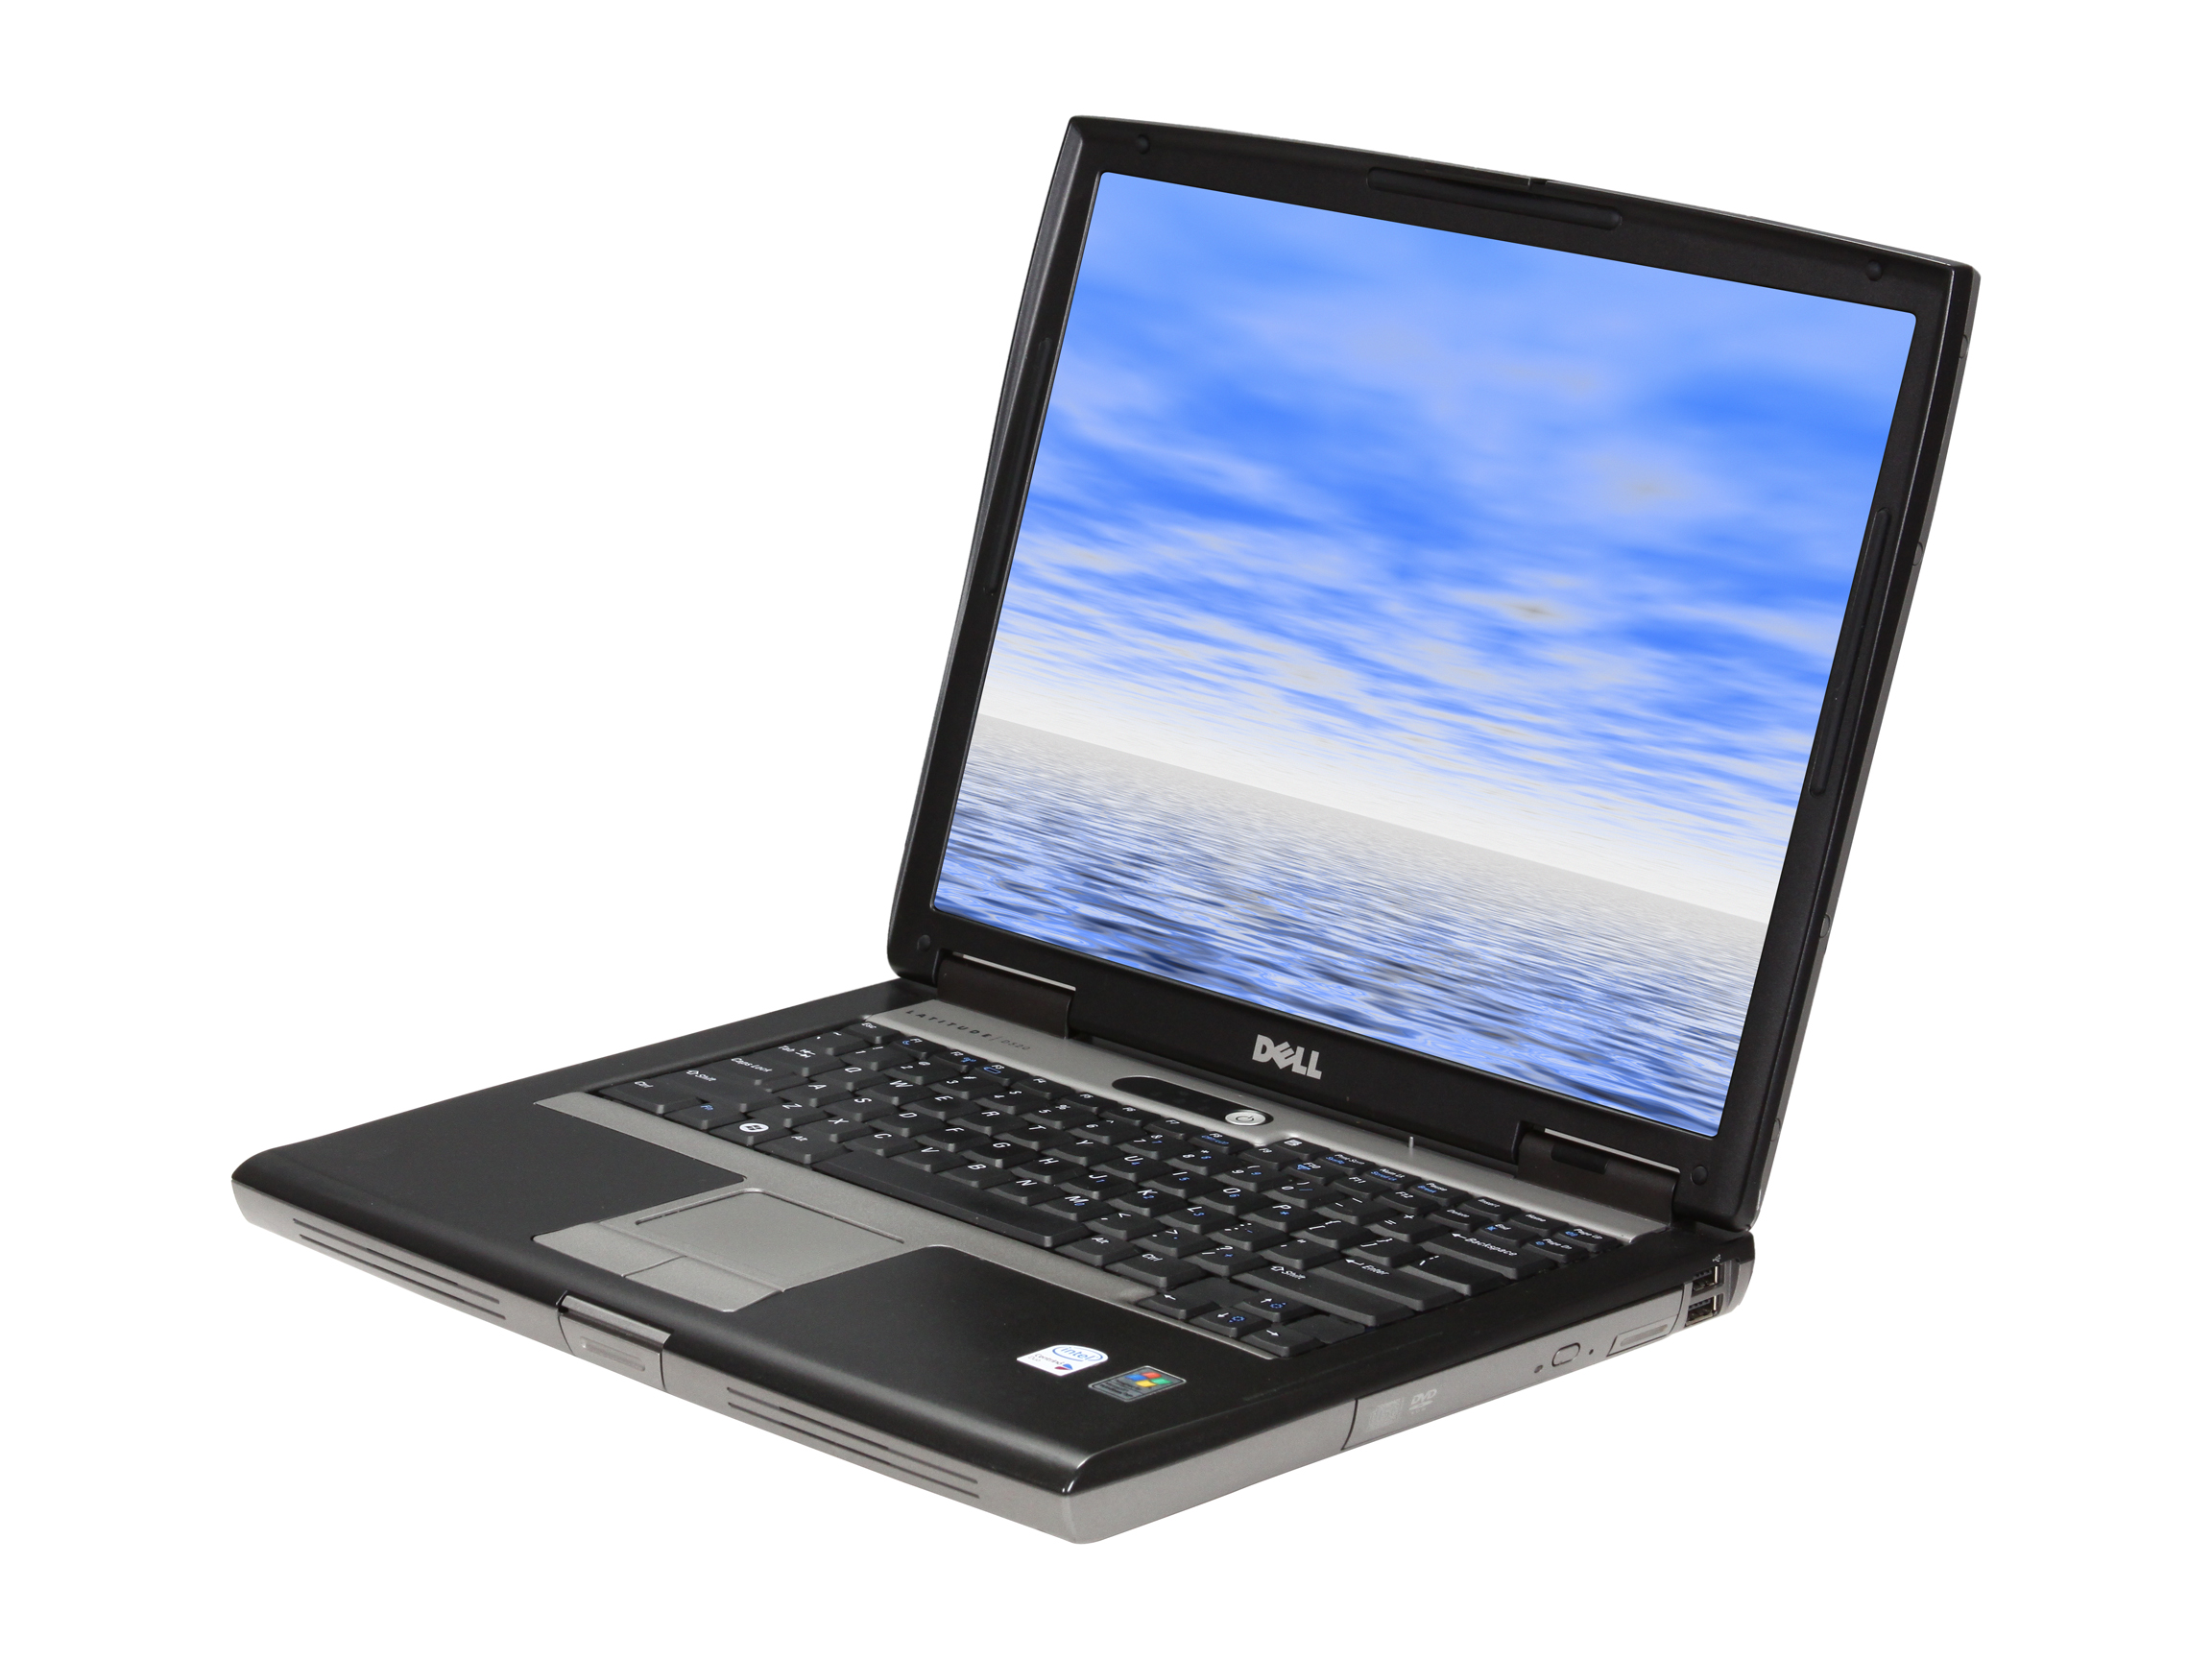 DELL Latitude D520 Notebook Intel Core 2 Duo T5500 (1.66GHz) 1GB Memory 40GB HDD Intel GMA950 15.0"